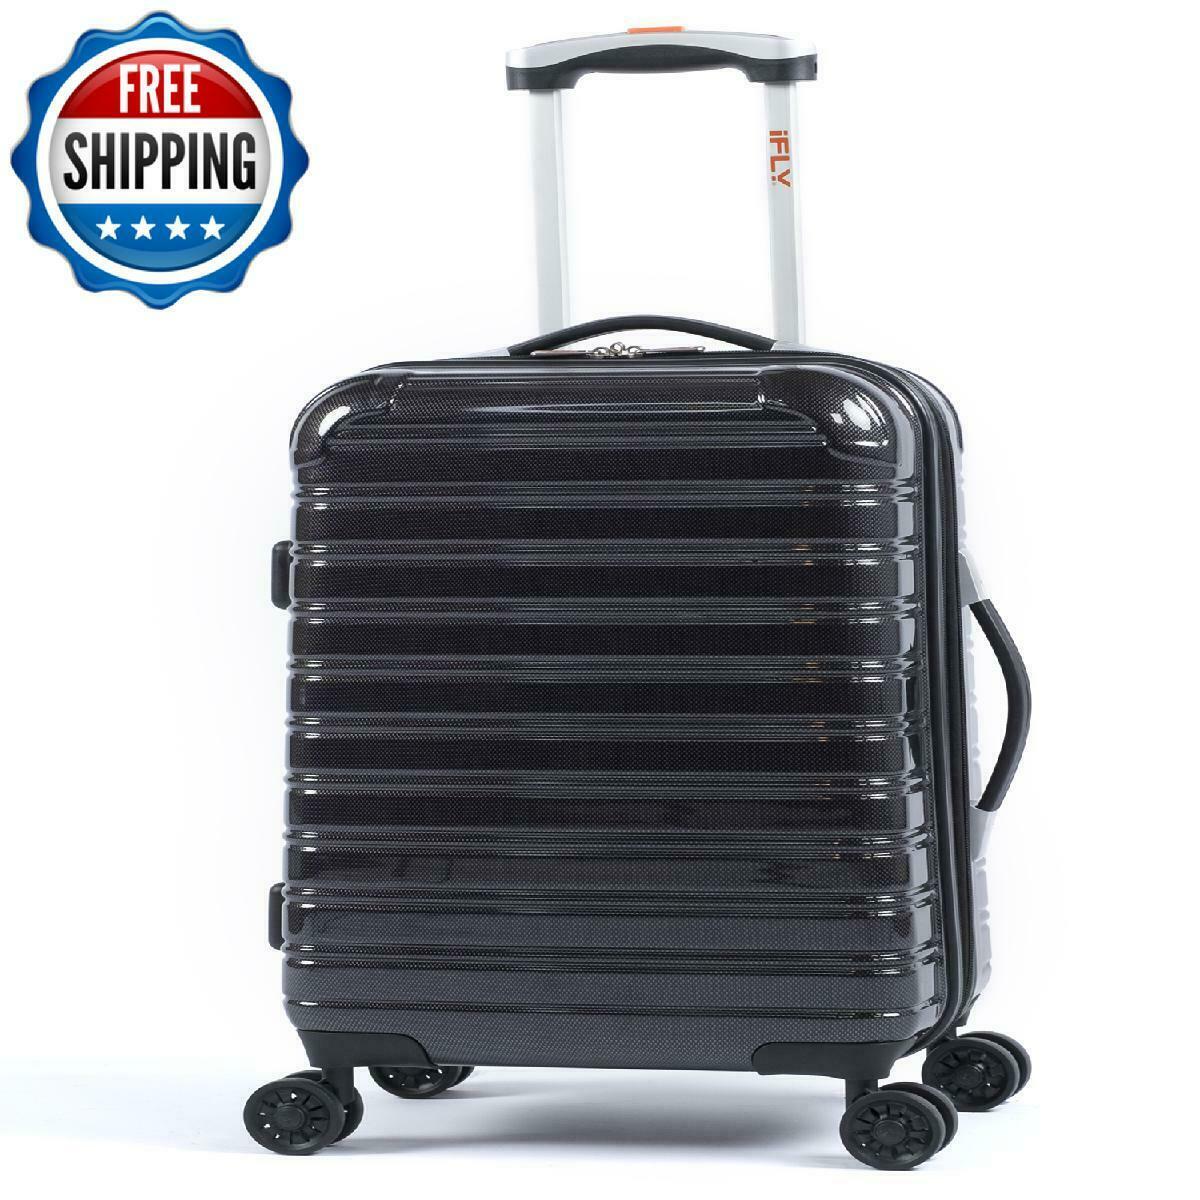 Hardside Luggage Travel Rolling 20" Carry On Suitcase Lightweight Wheeled Black